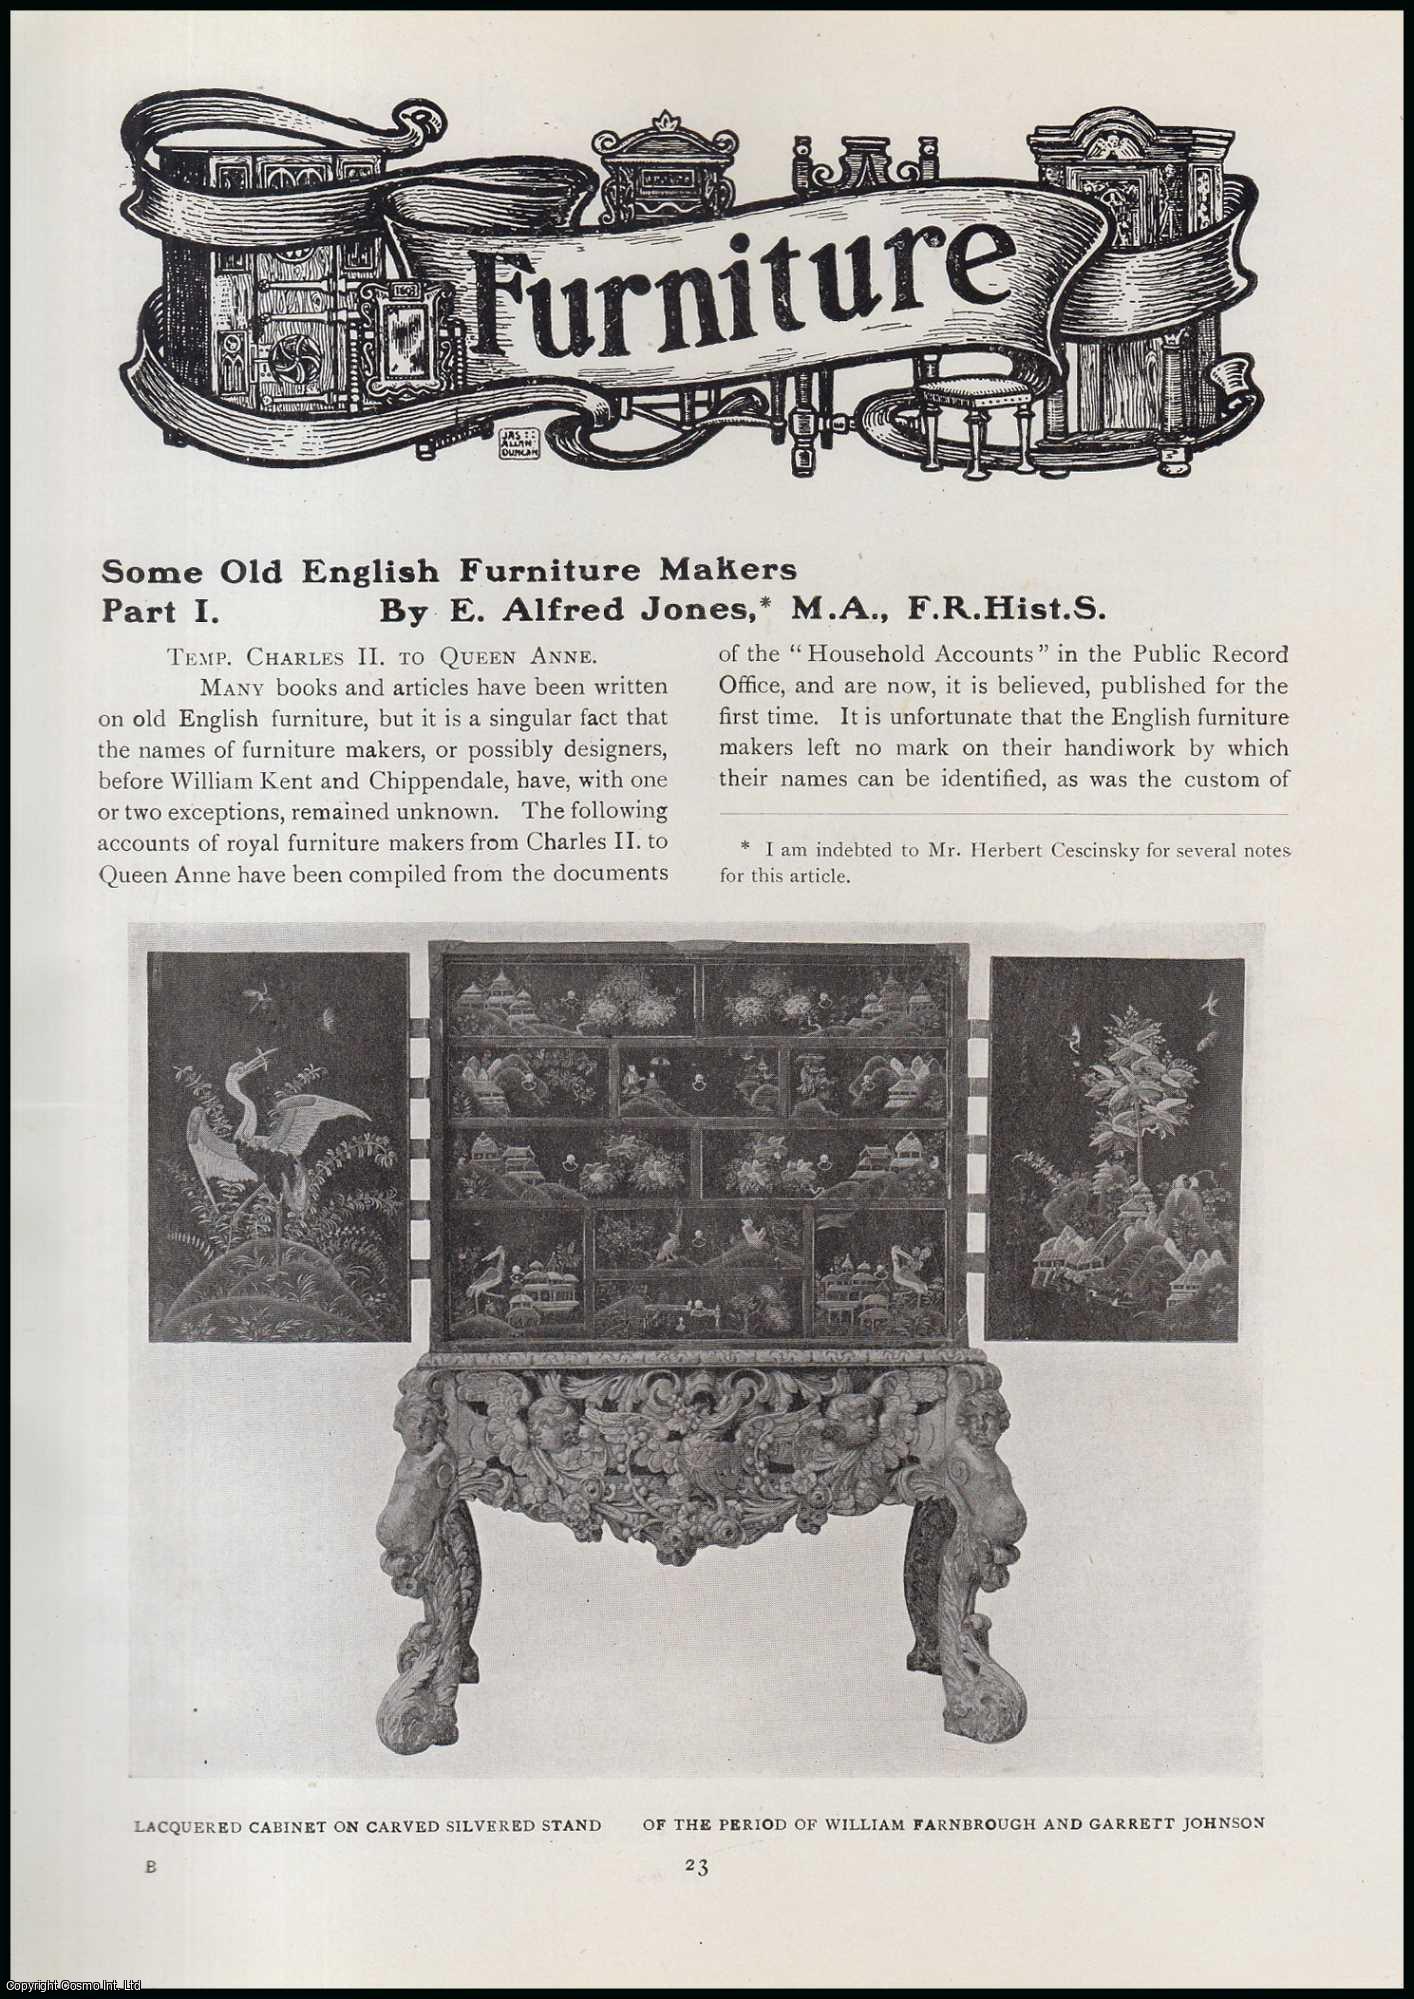 E. Alfred Jones - William Farnbrough & Garrett Johnson (part 1) : Some Old English Furniture Makers. An original article from The Connoisseur, 1920.